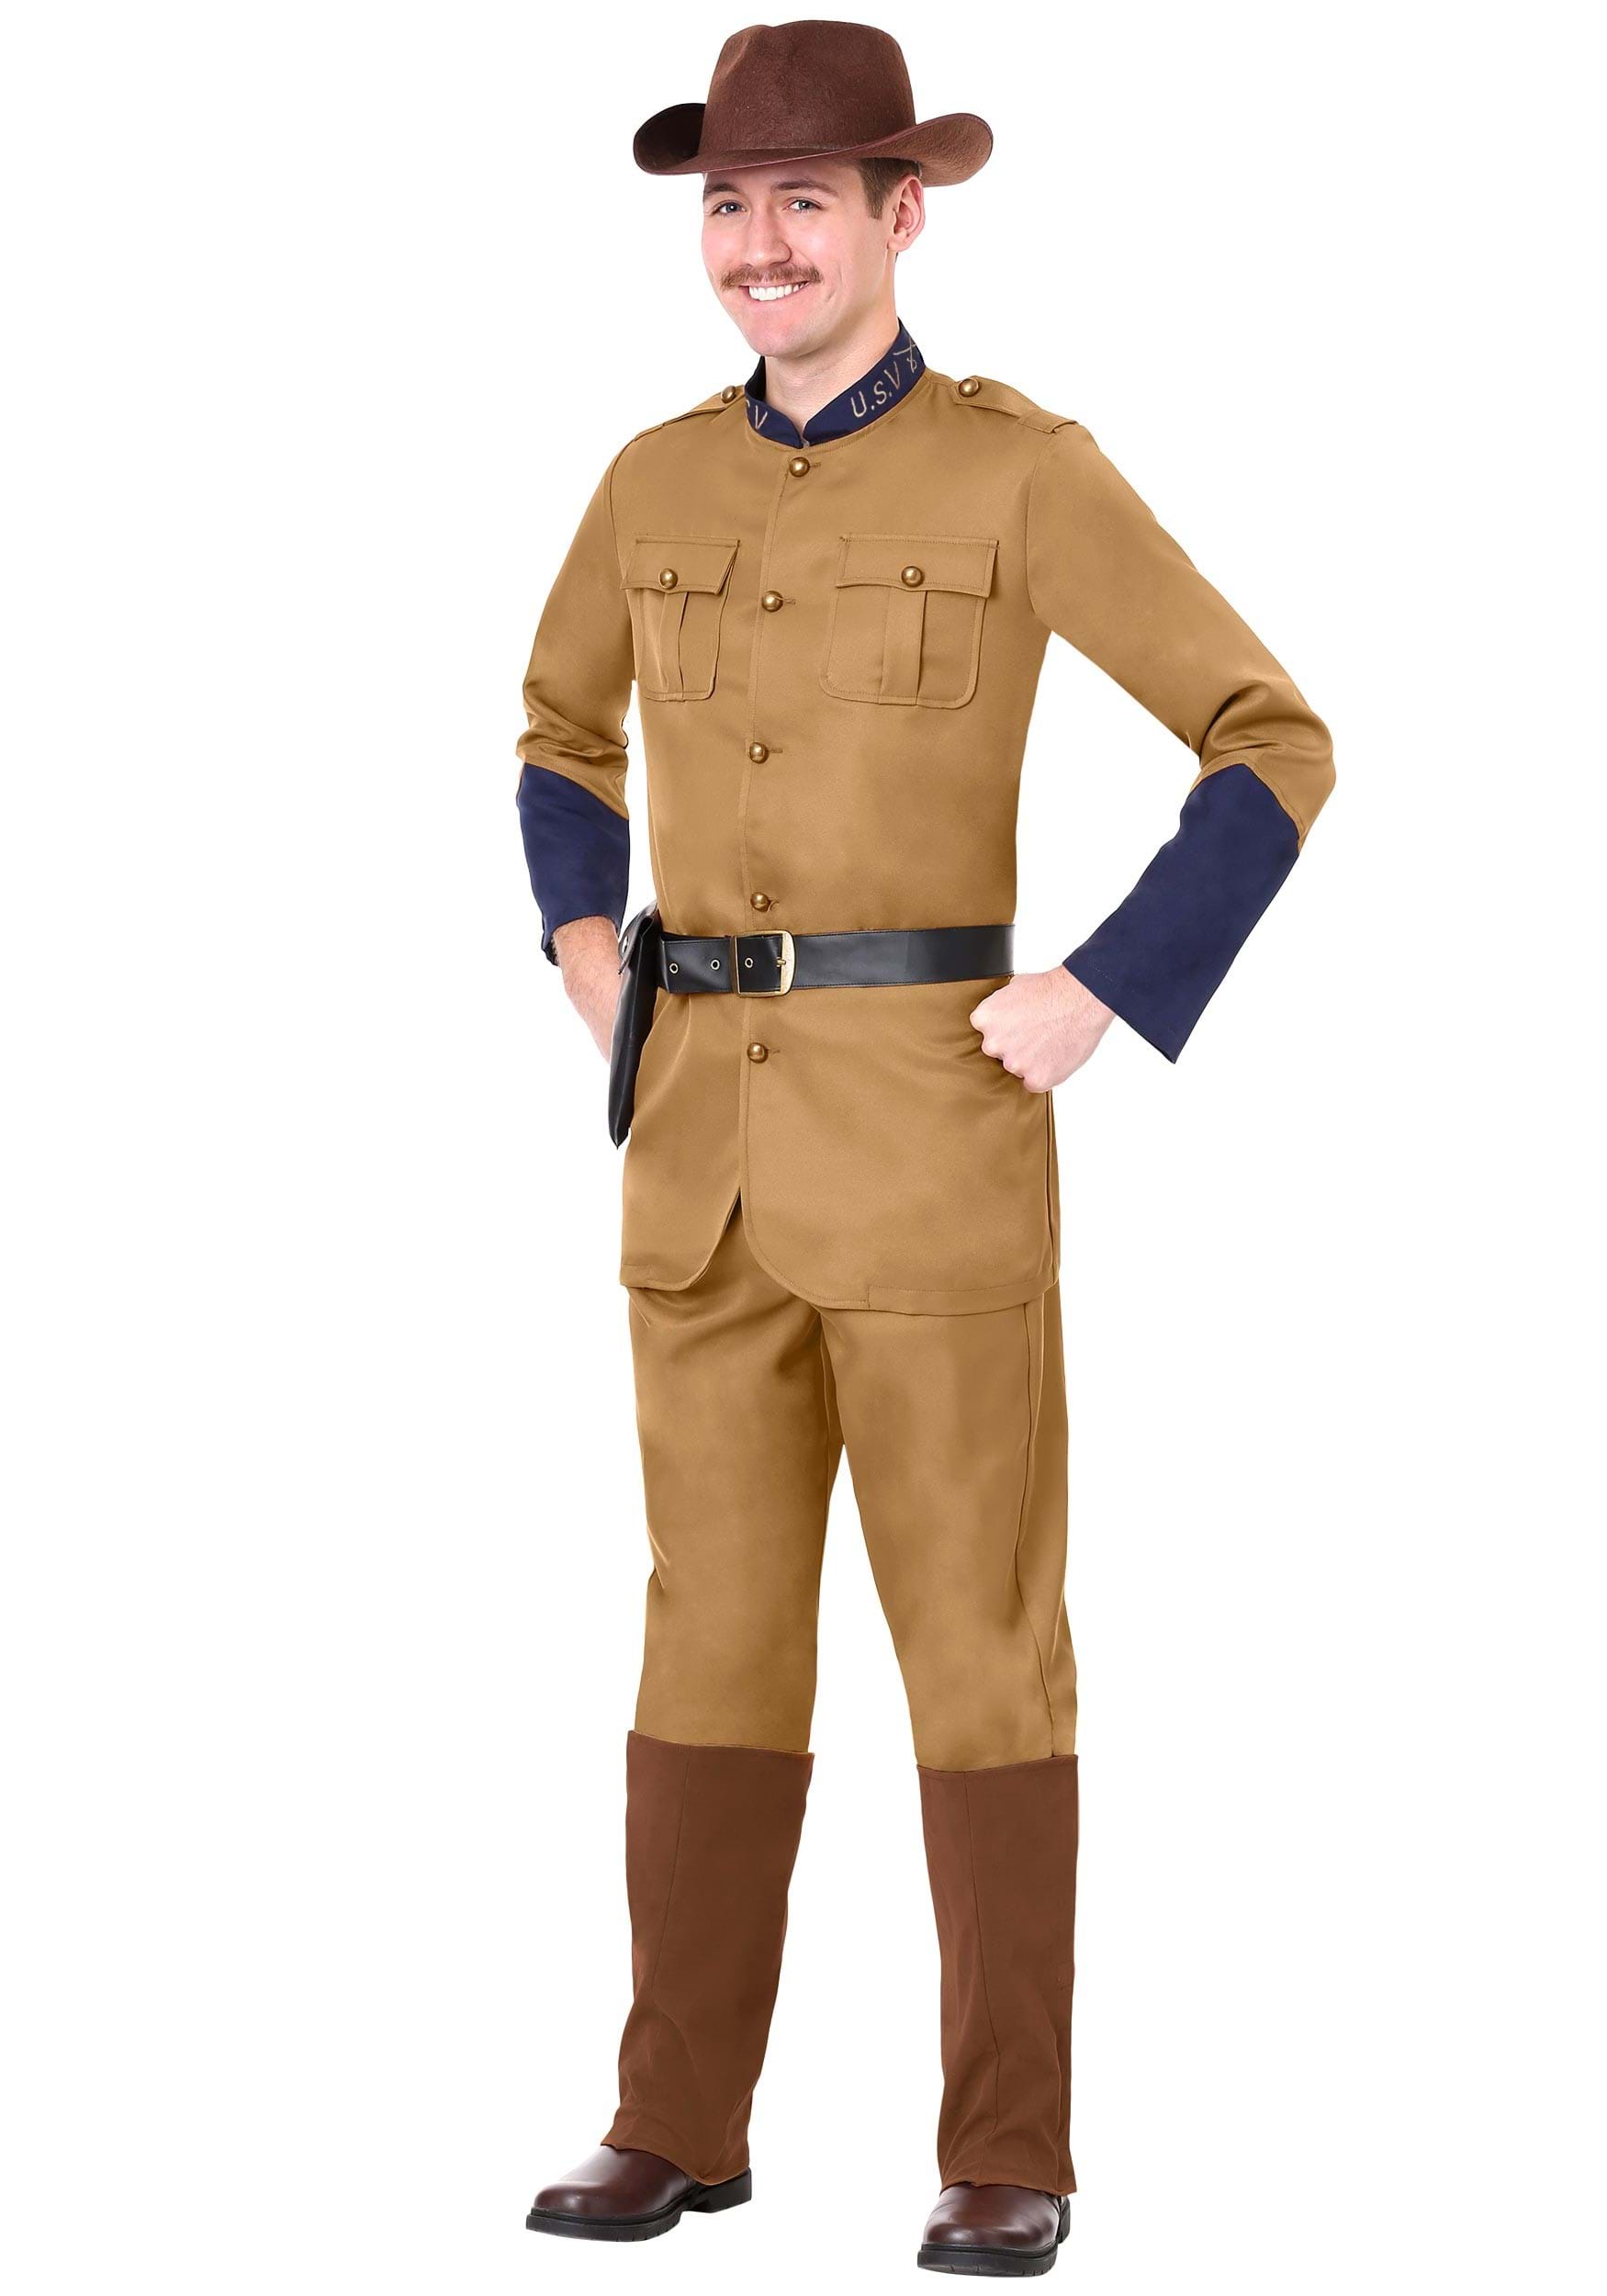 Photos - Fancy Dress TEDDY FUN Costumes Officer  Roosevelt Costume for Men Yellow/Beige FUN1 